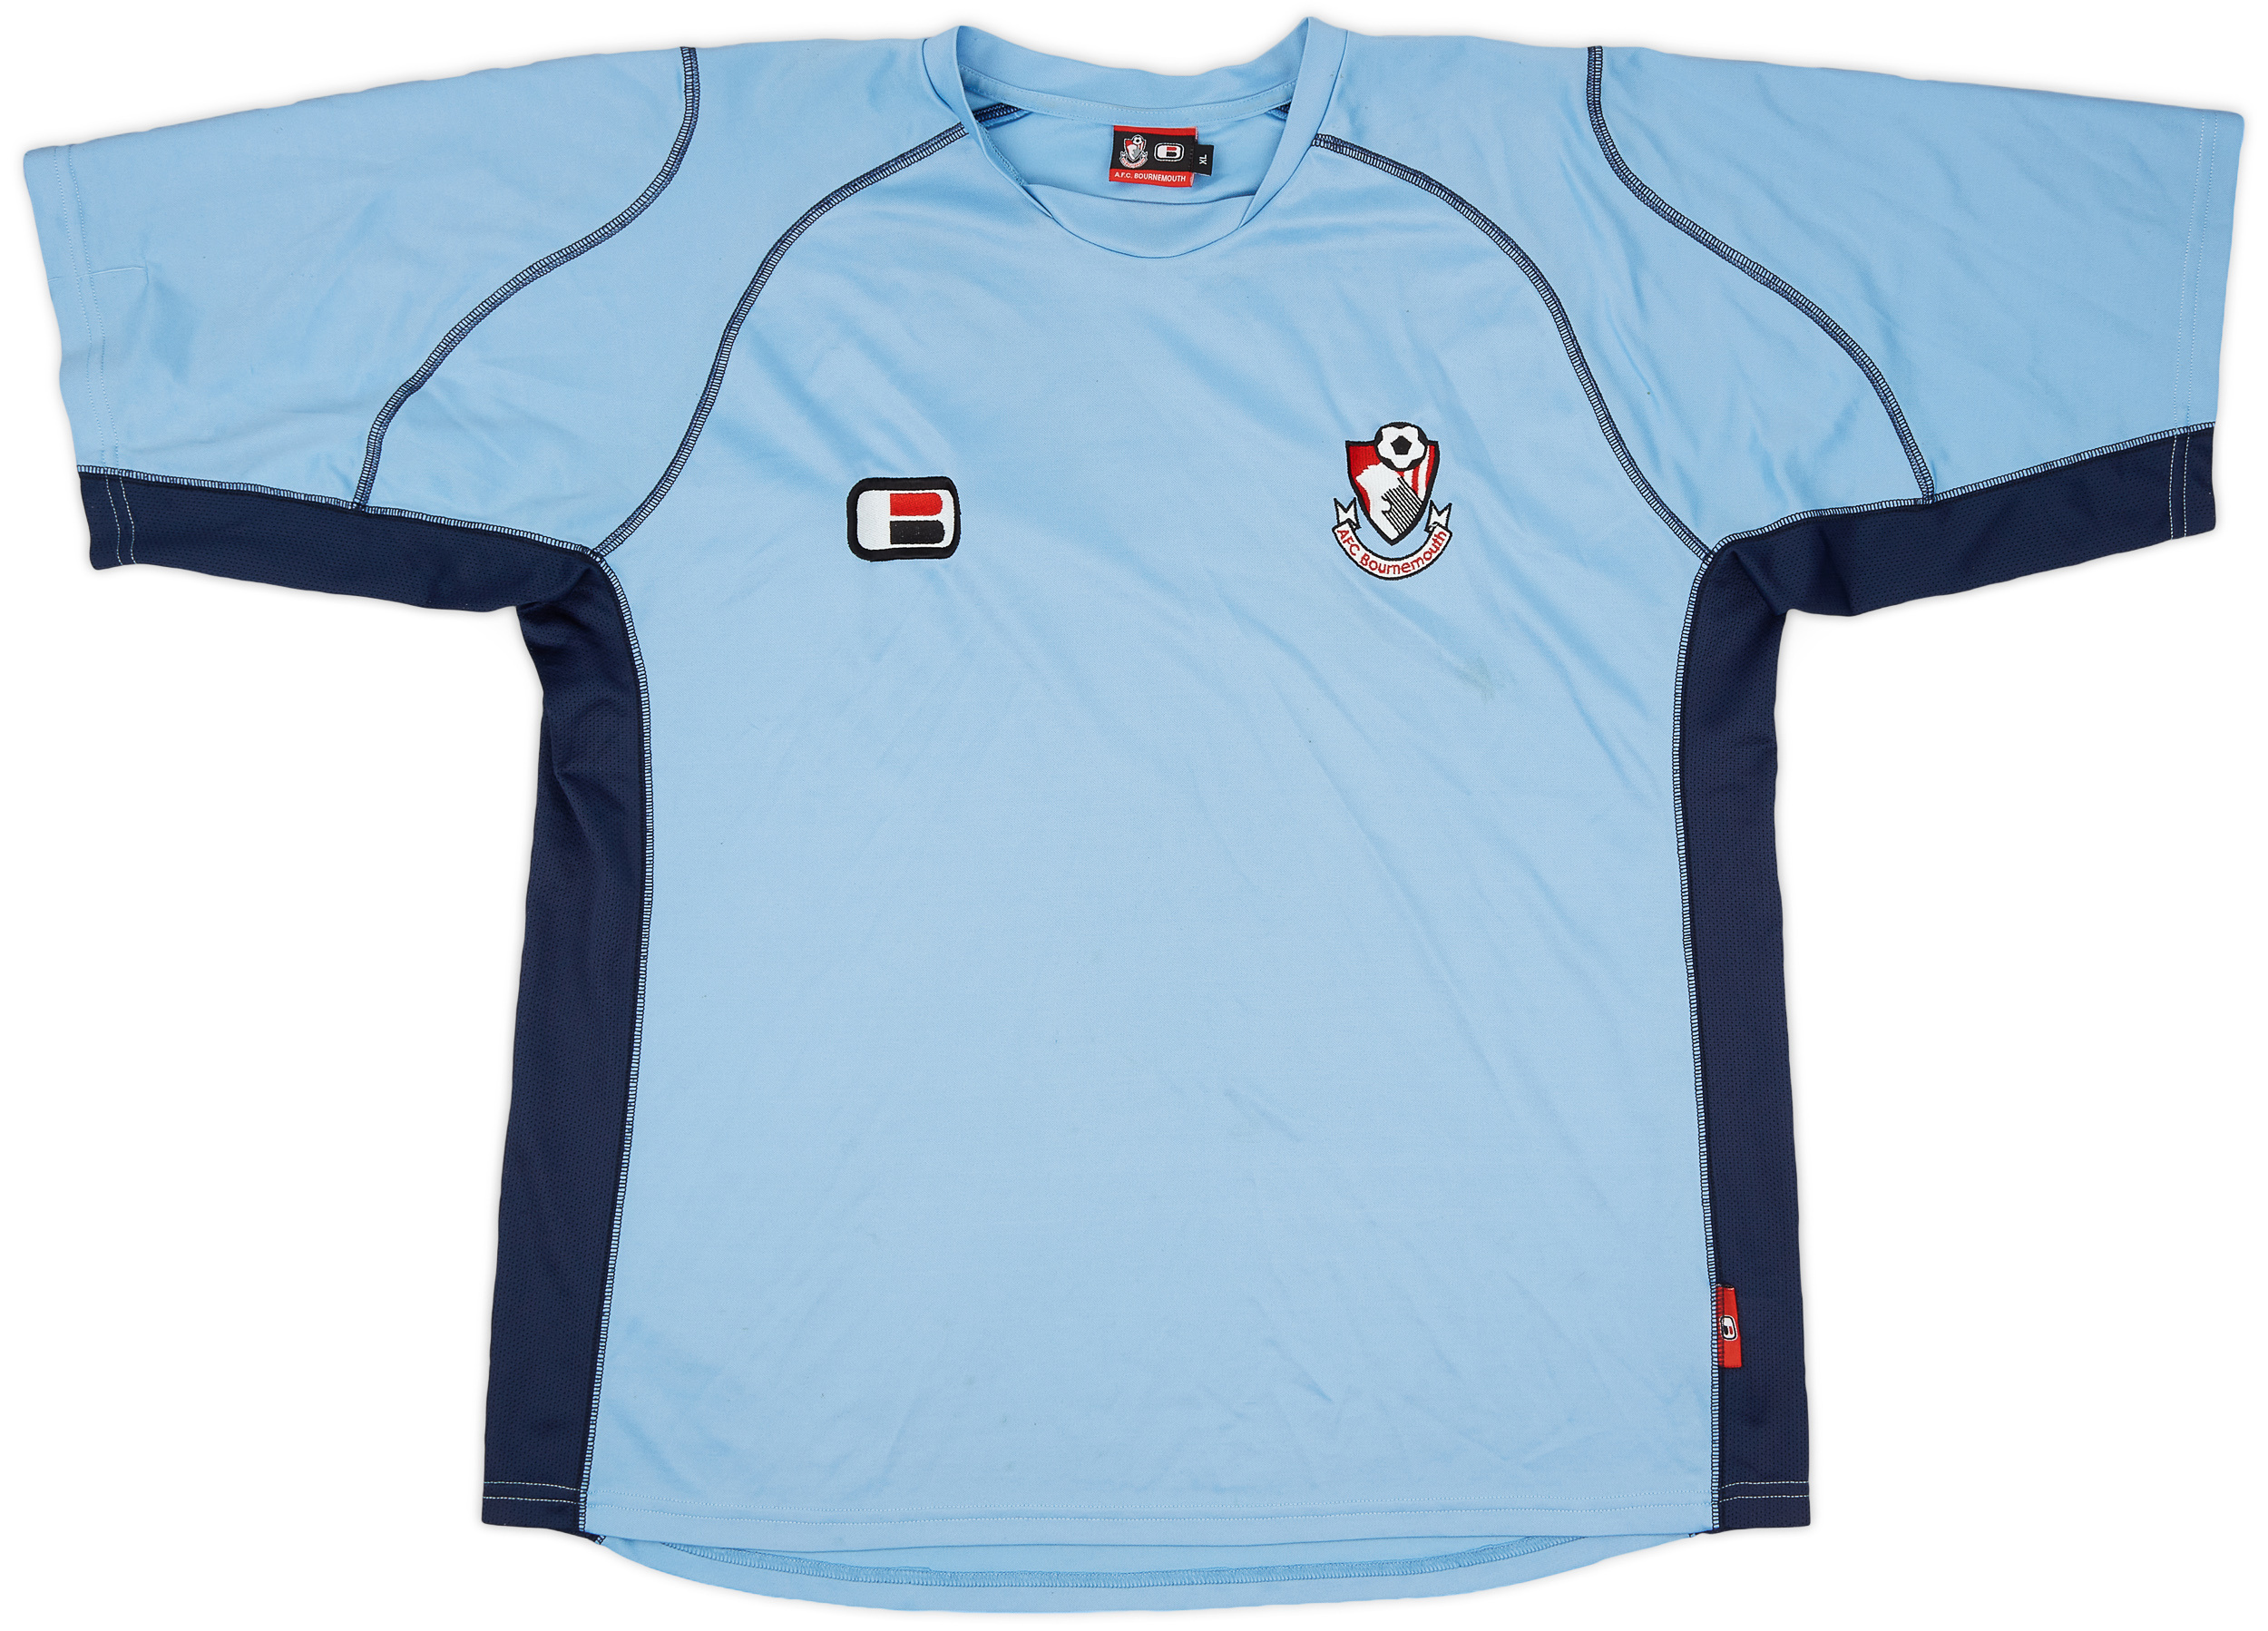 Bournemouth  Uit  shirt  (Original)